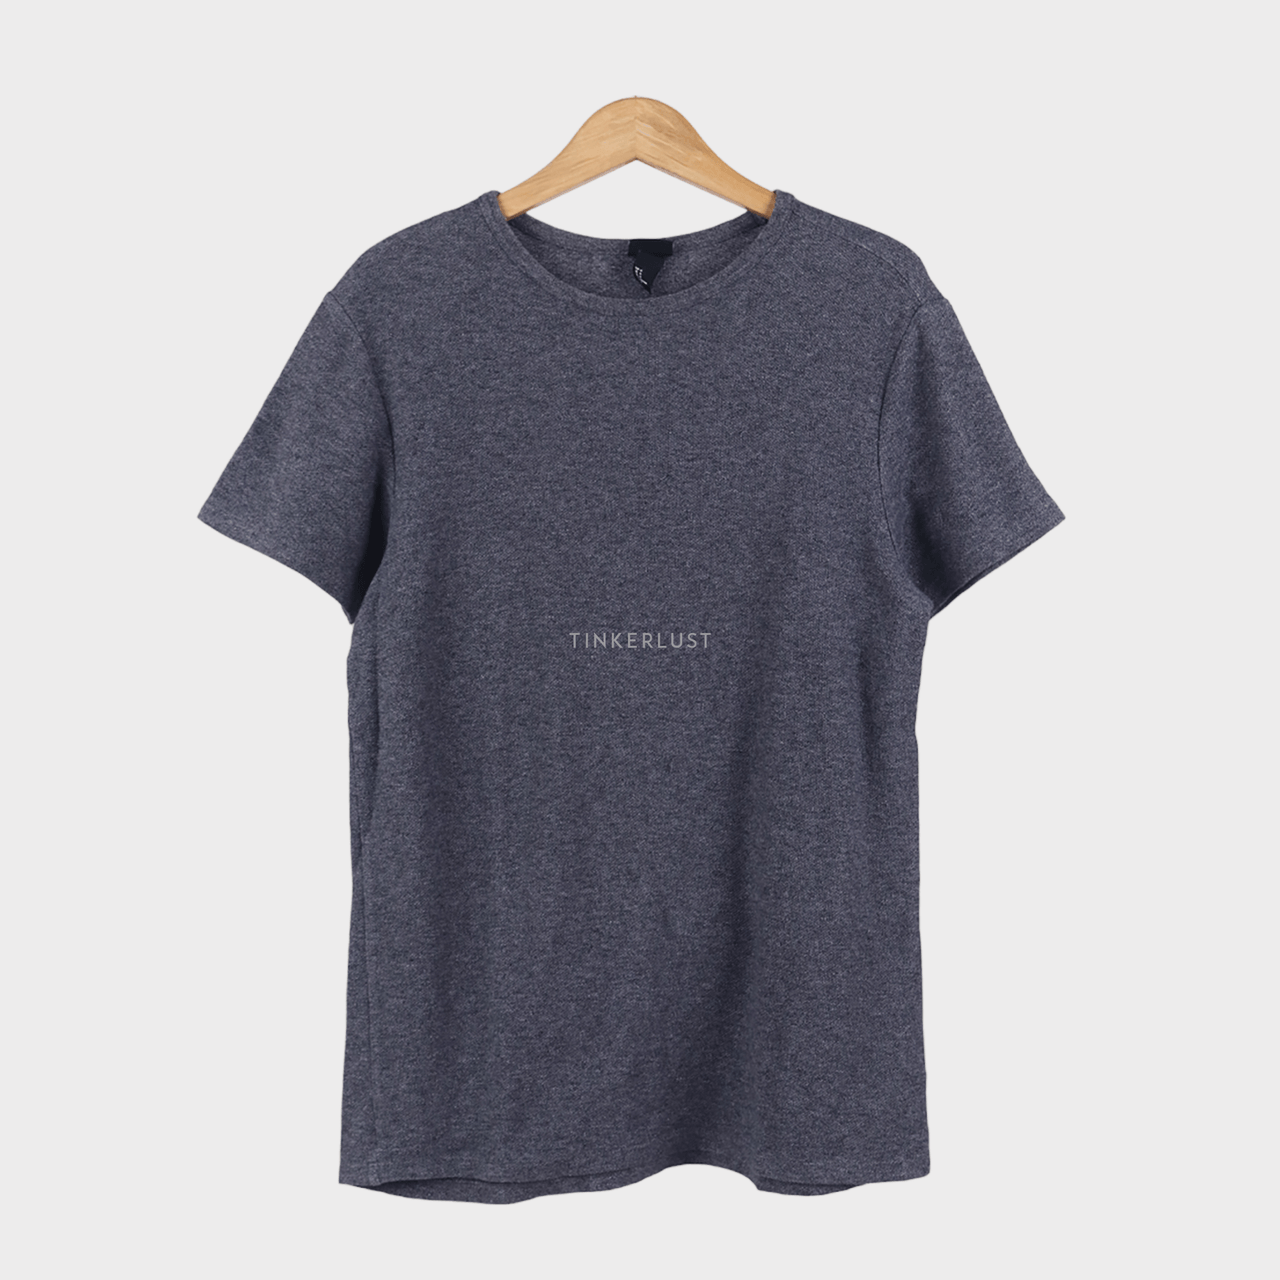 H&M Grey T-Shirt